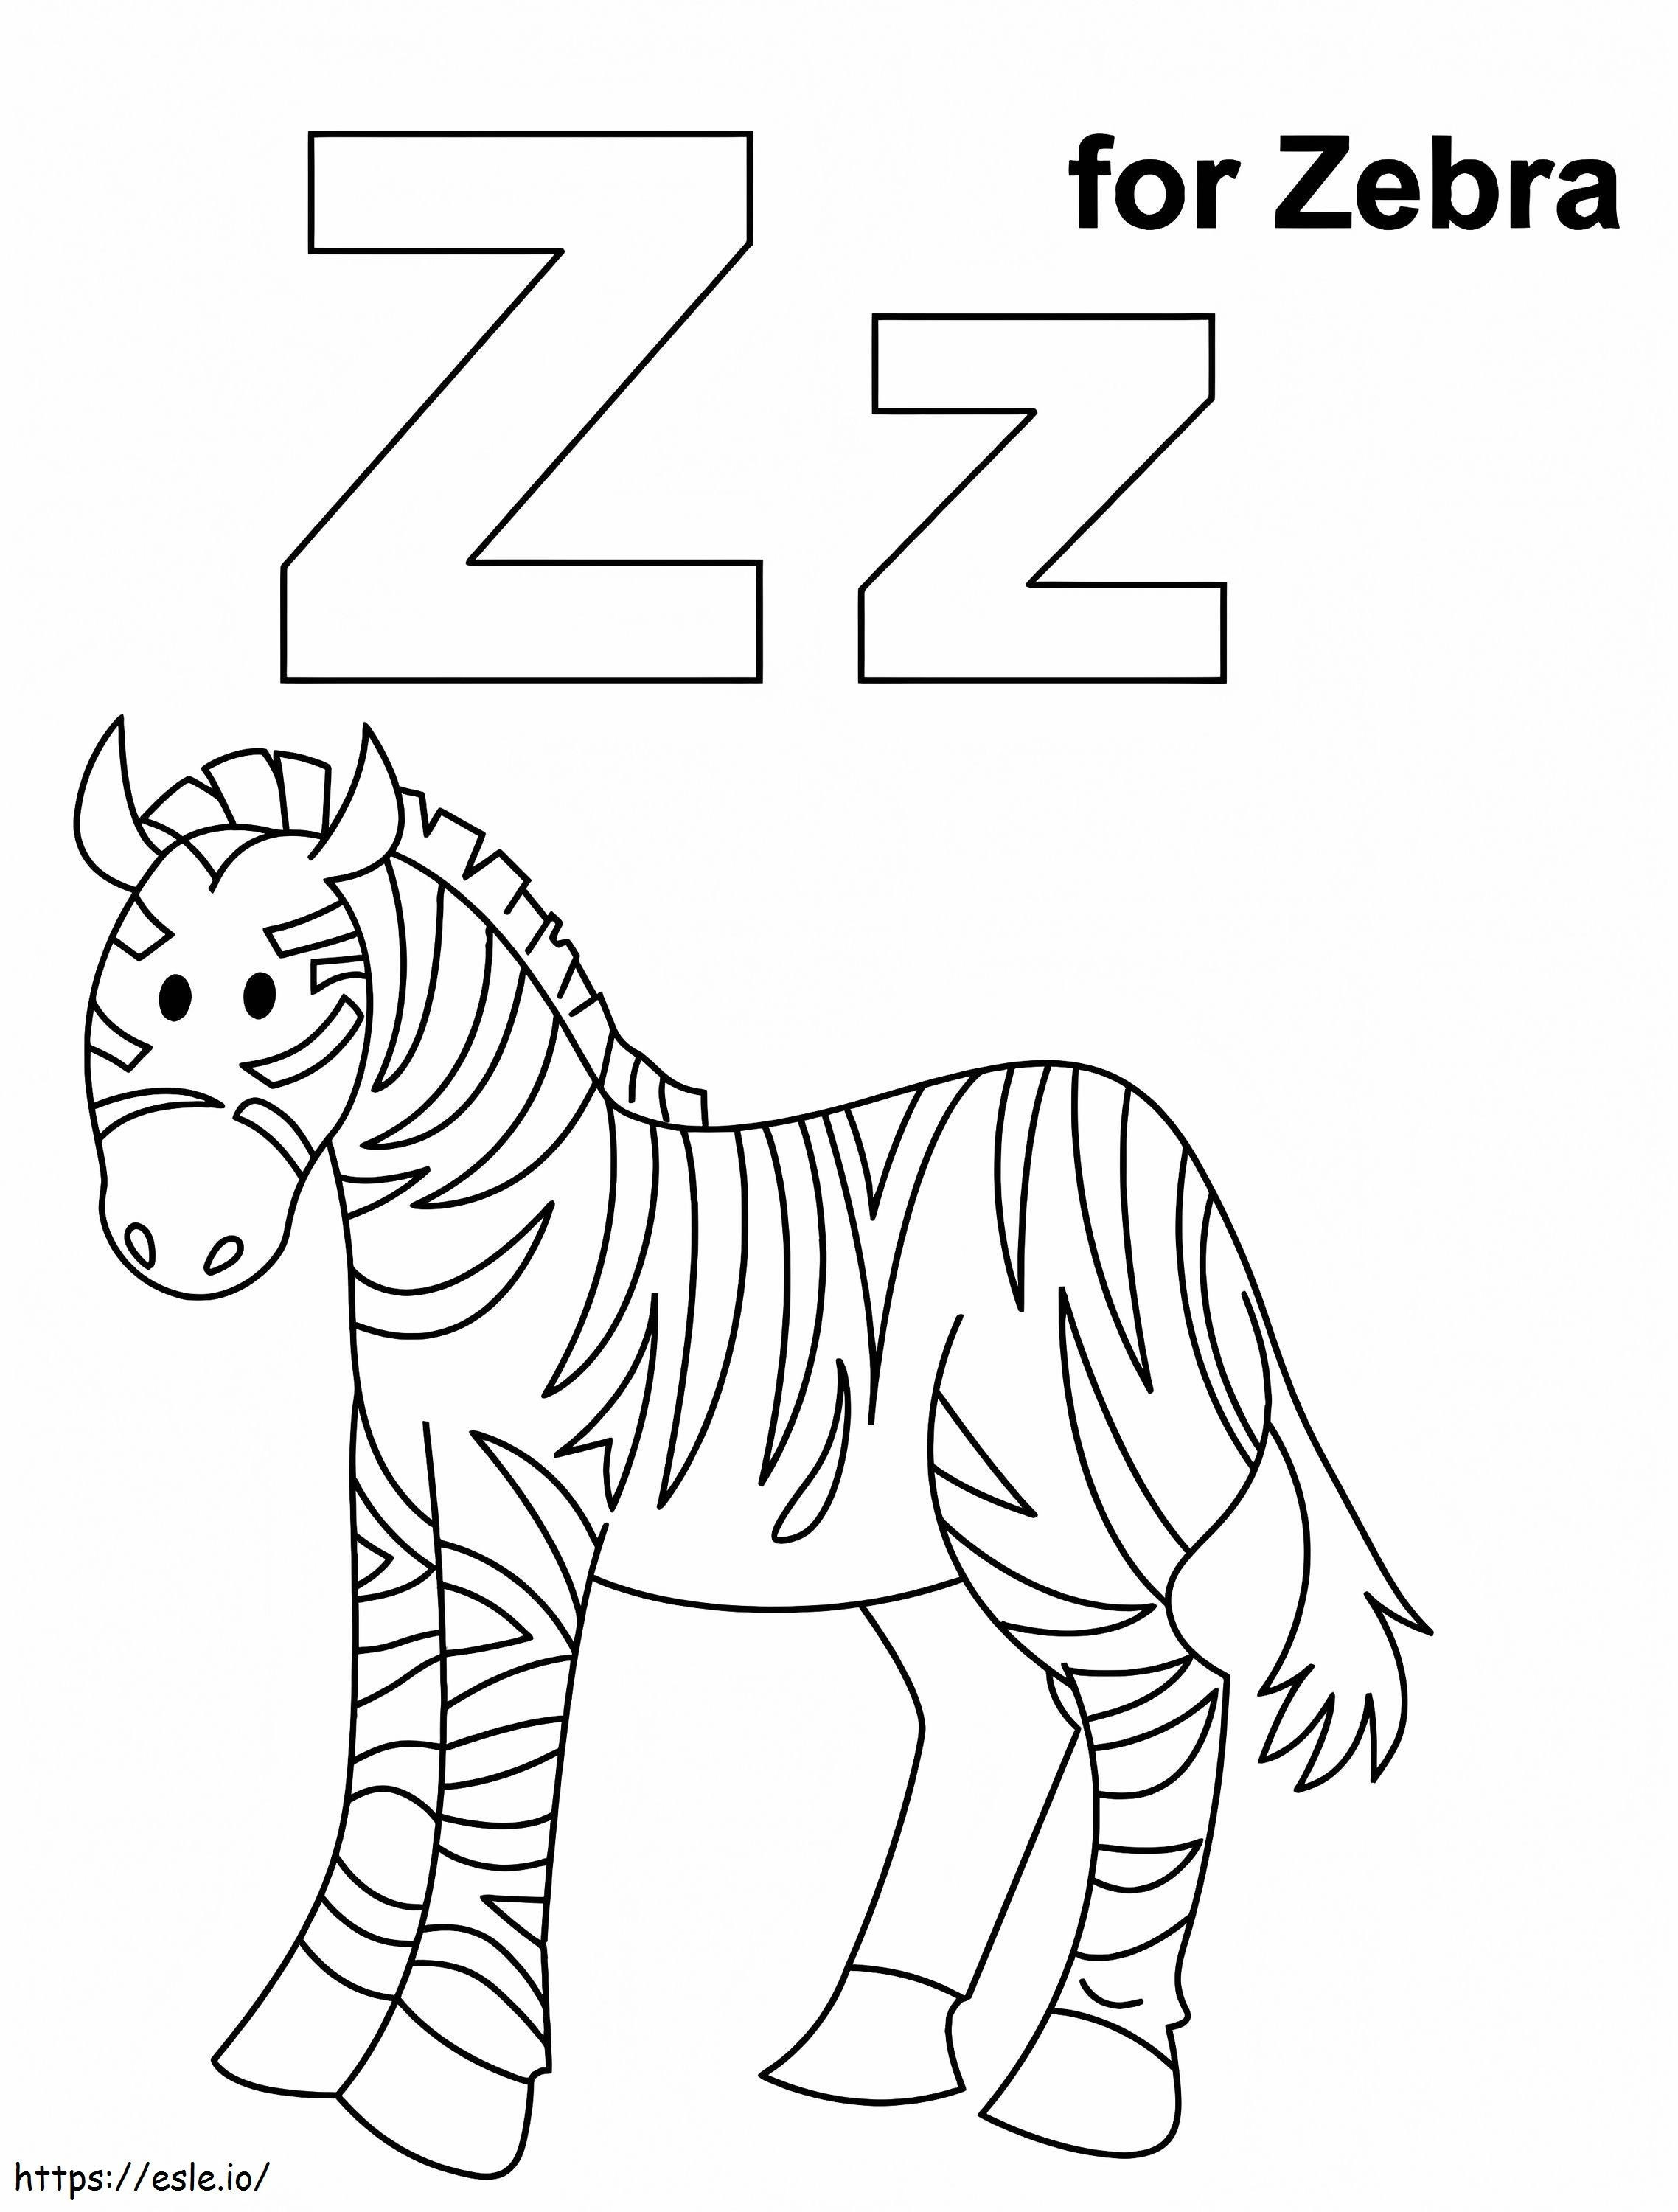 Zebra Letter Z 1 coloring page